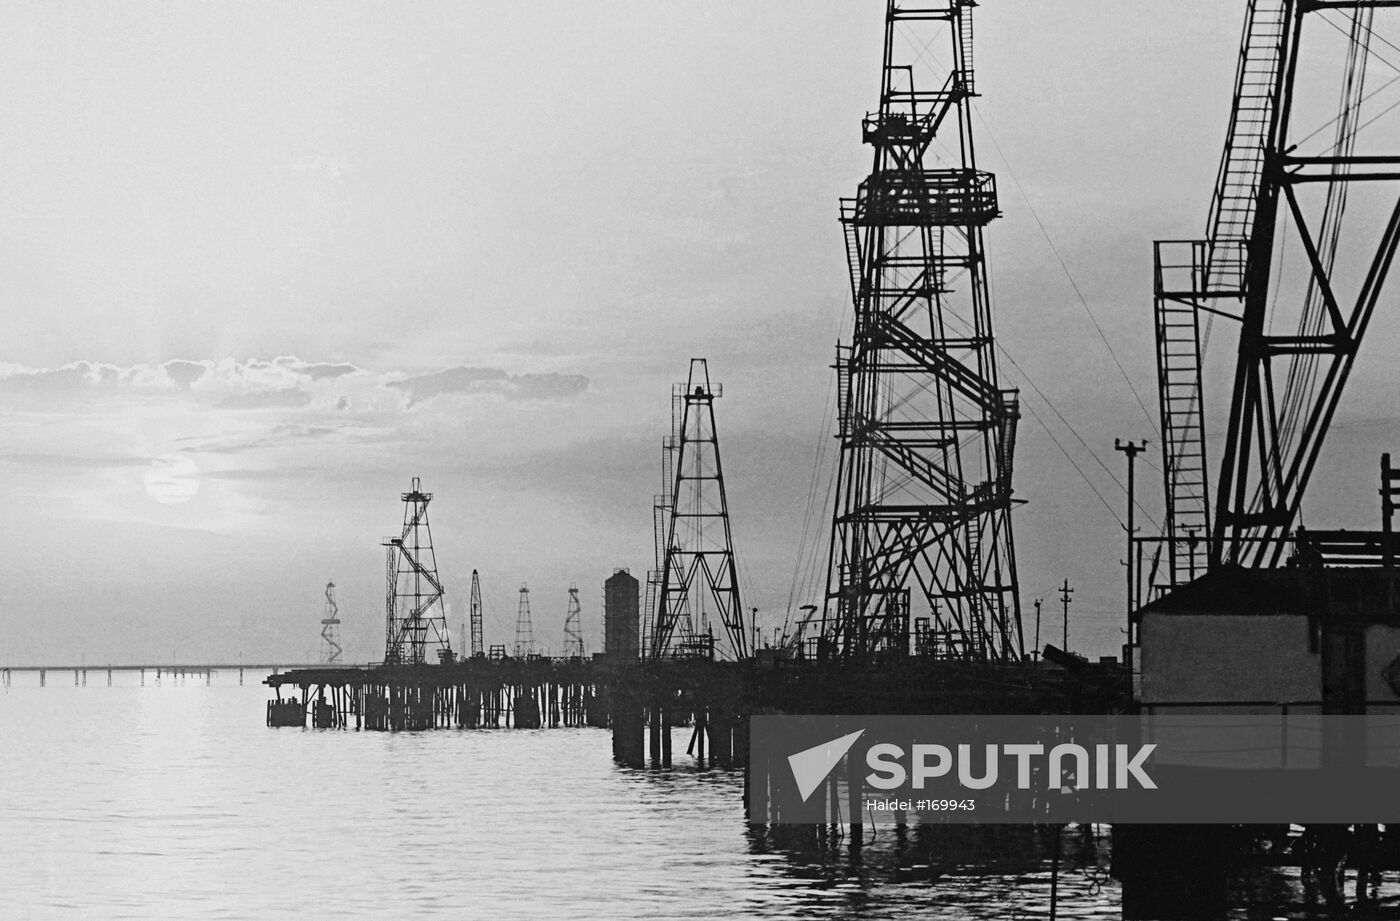 Caspian Sea offshore oil drilling derricks